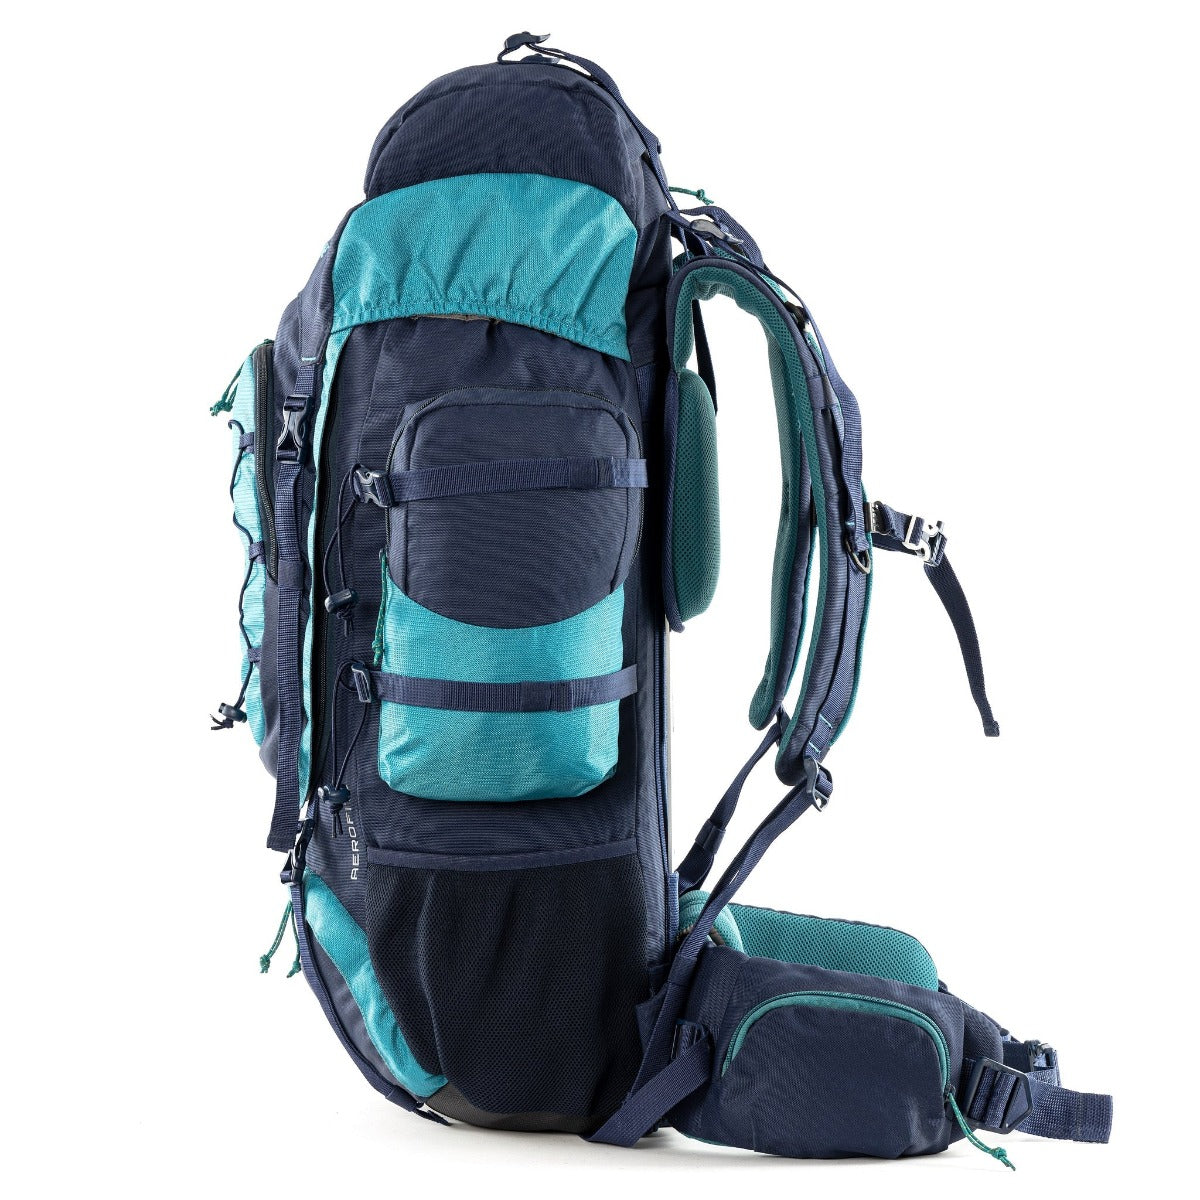 Walker Pro Trekking and Hiking Rucksack - 80 Litre - Blue 4